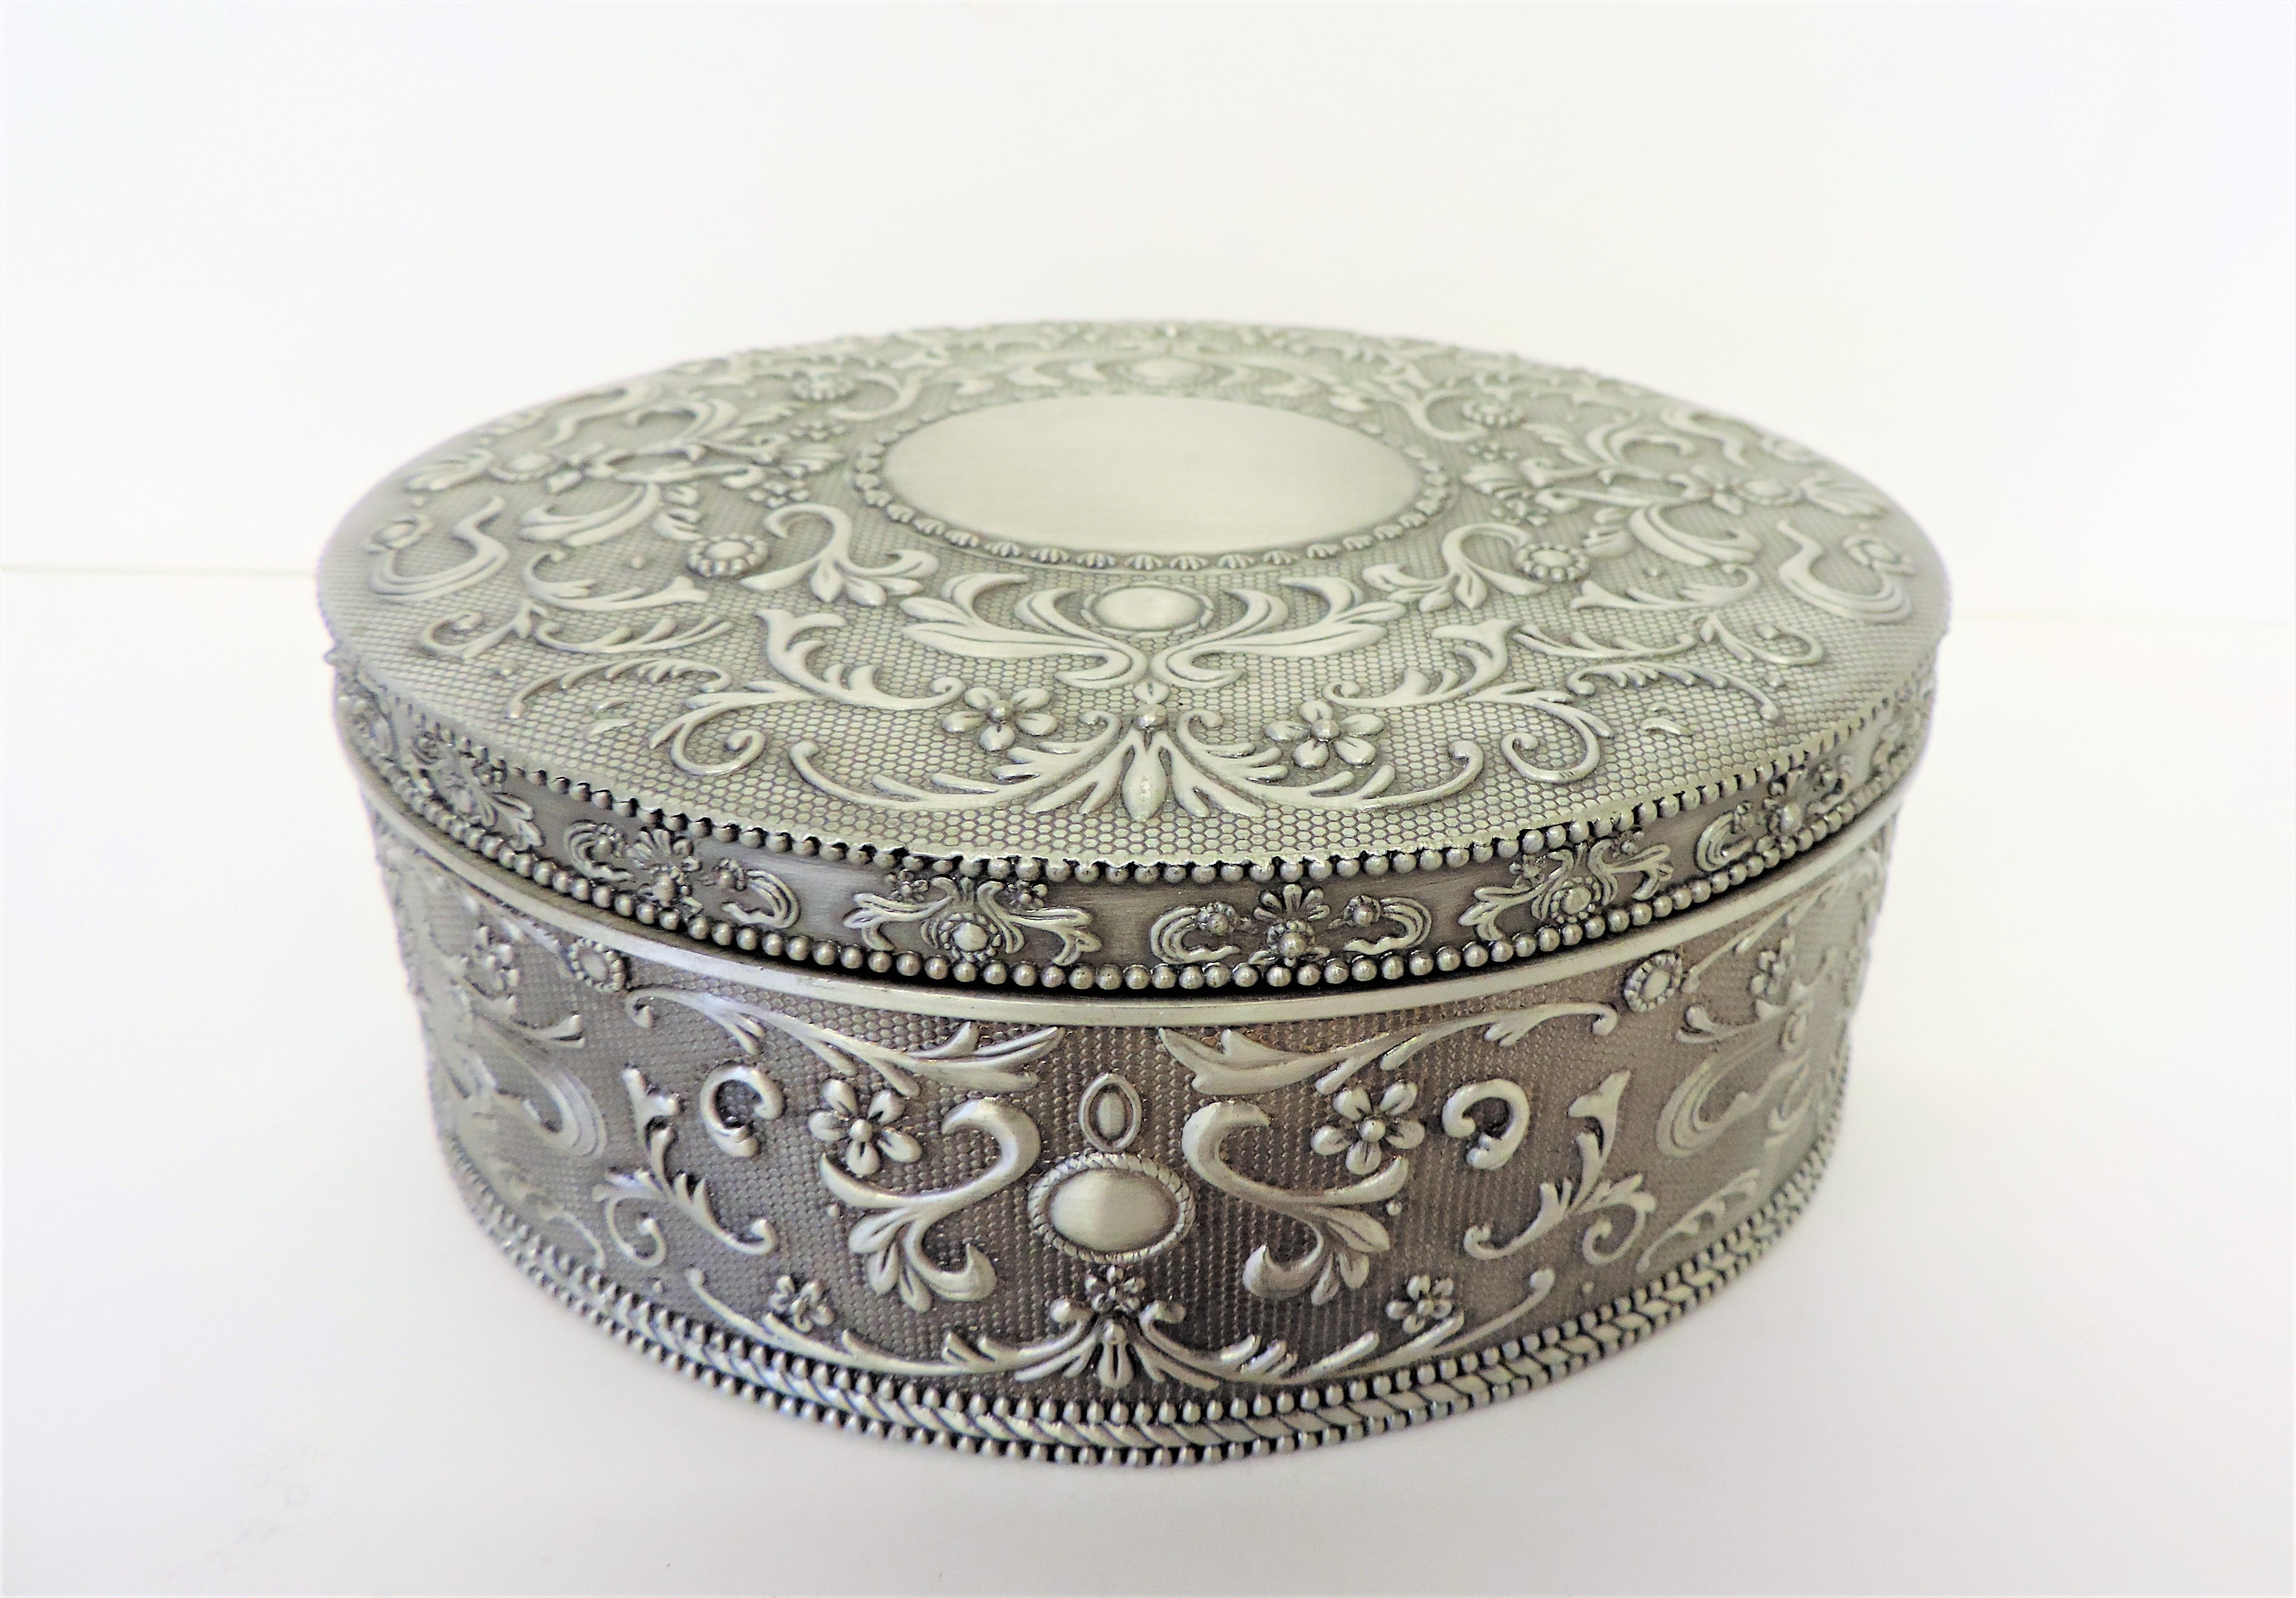 White Metal Velvet Lined Jewellery Box. An oval black velvet lined jewellery box measuring 16cm